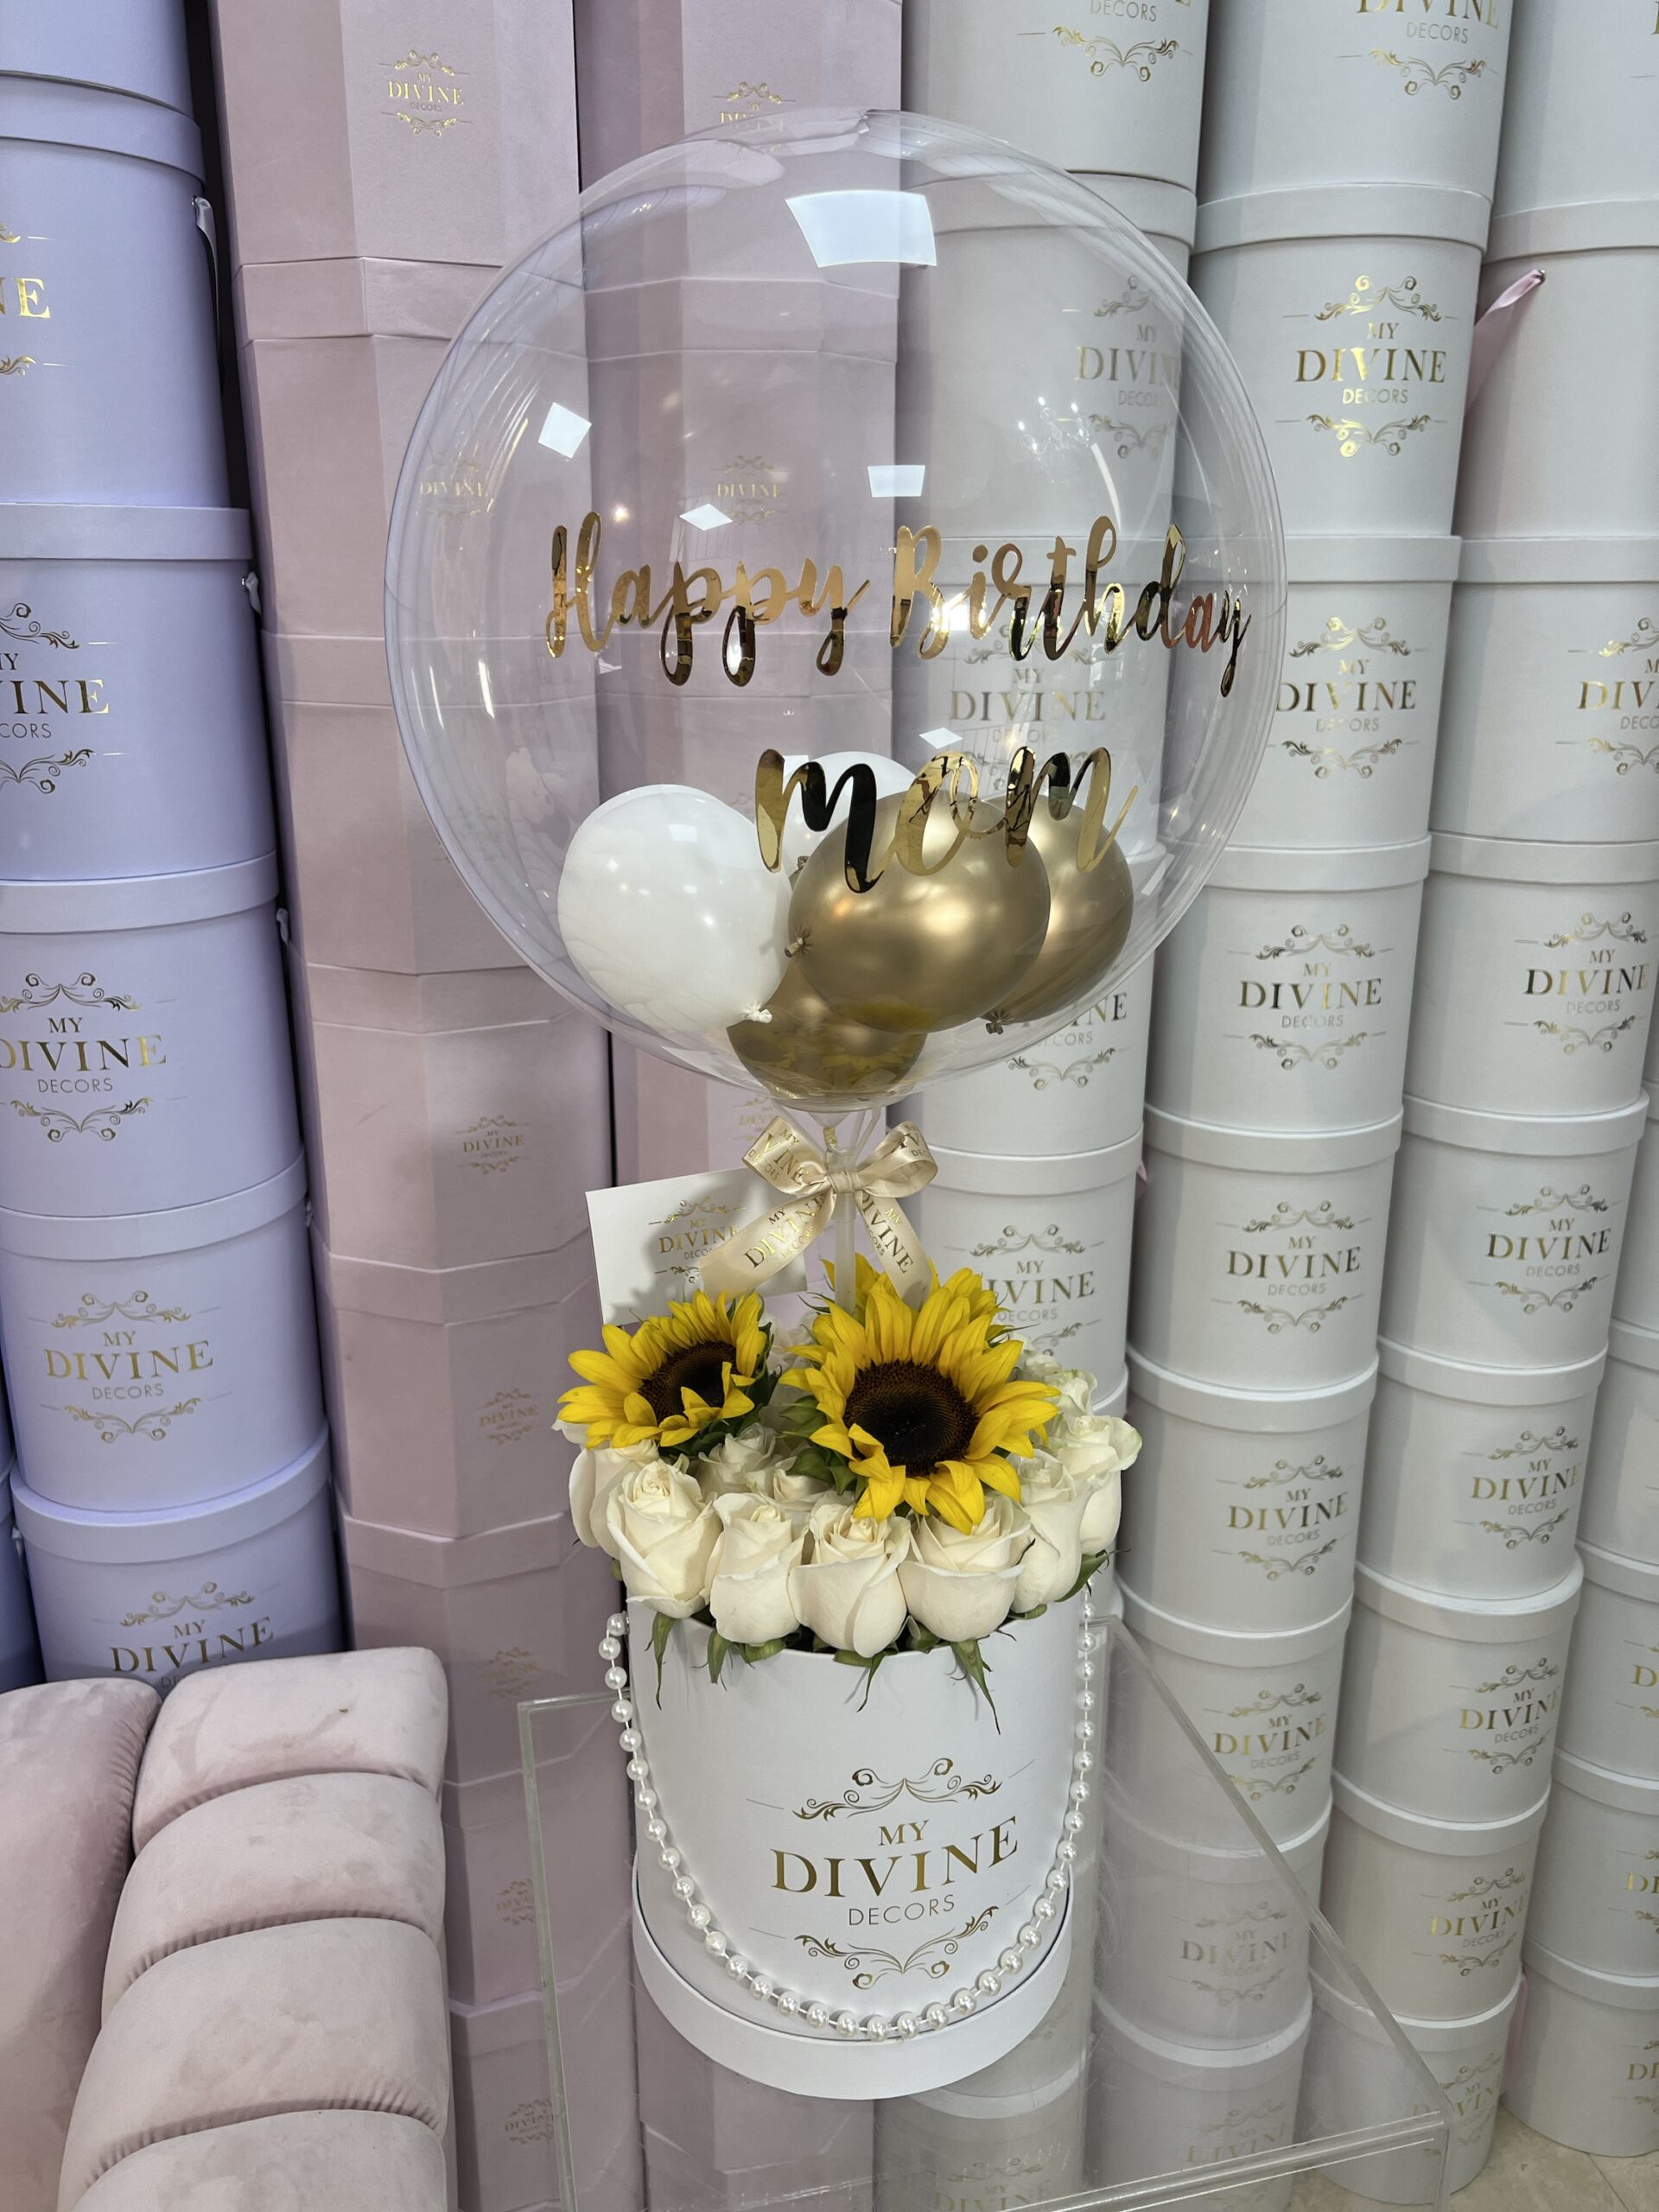 Balloon Flower Box  Balloon flowers, Birthday balloon decorations, Flower  box gift